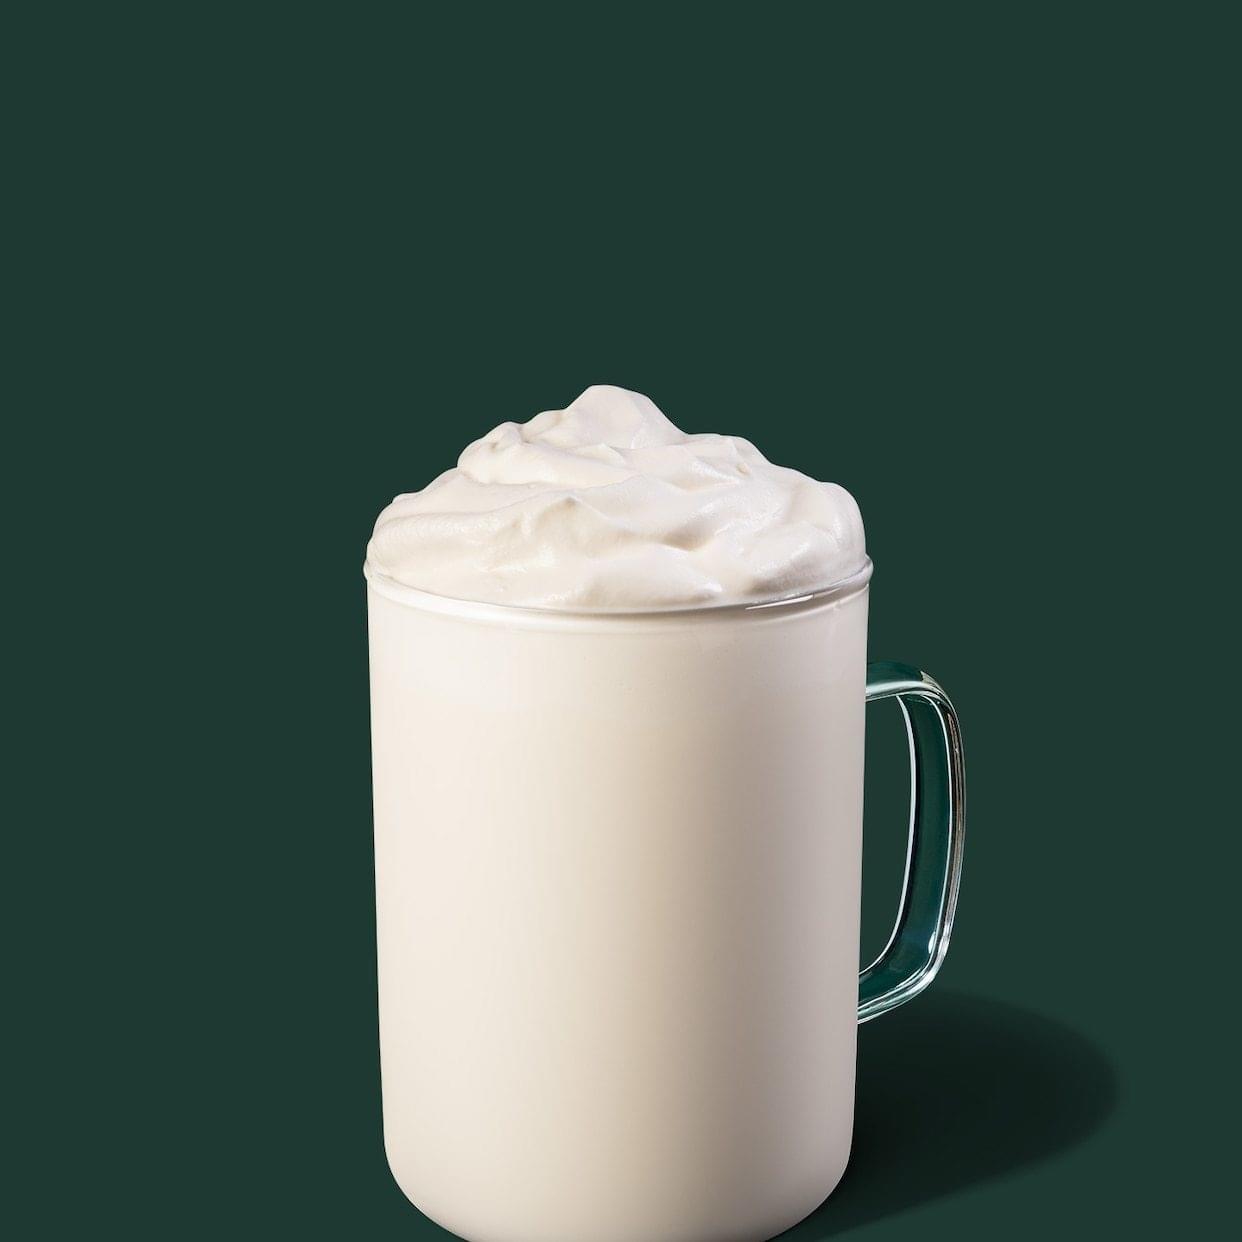 Starbucks Short Vanilla Creme Nutrition Facts